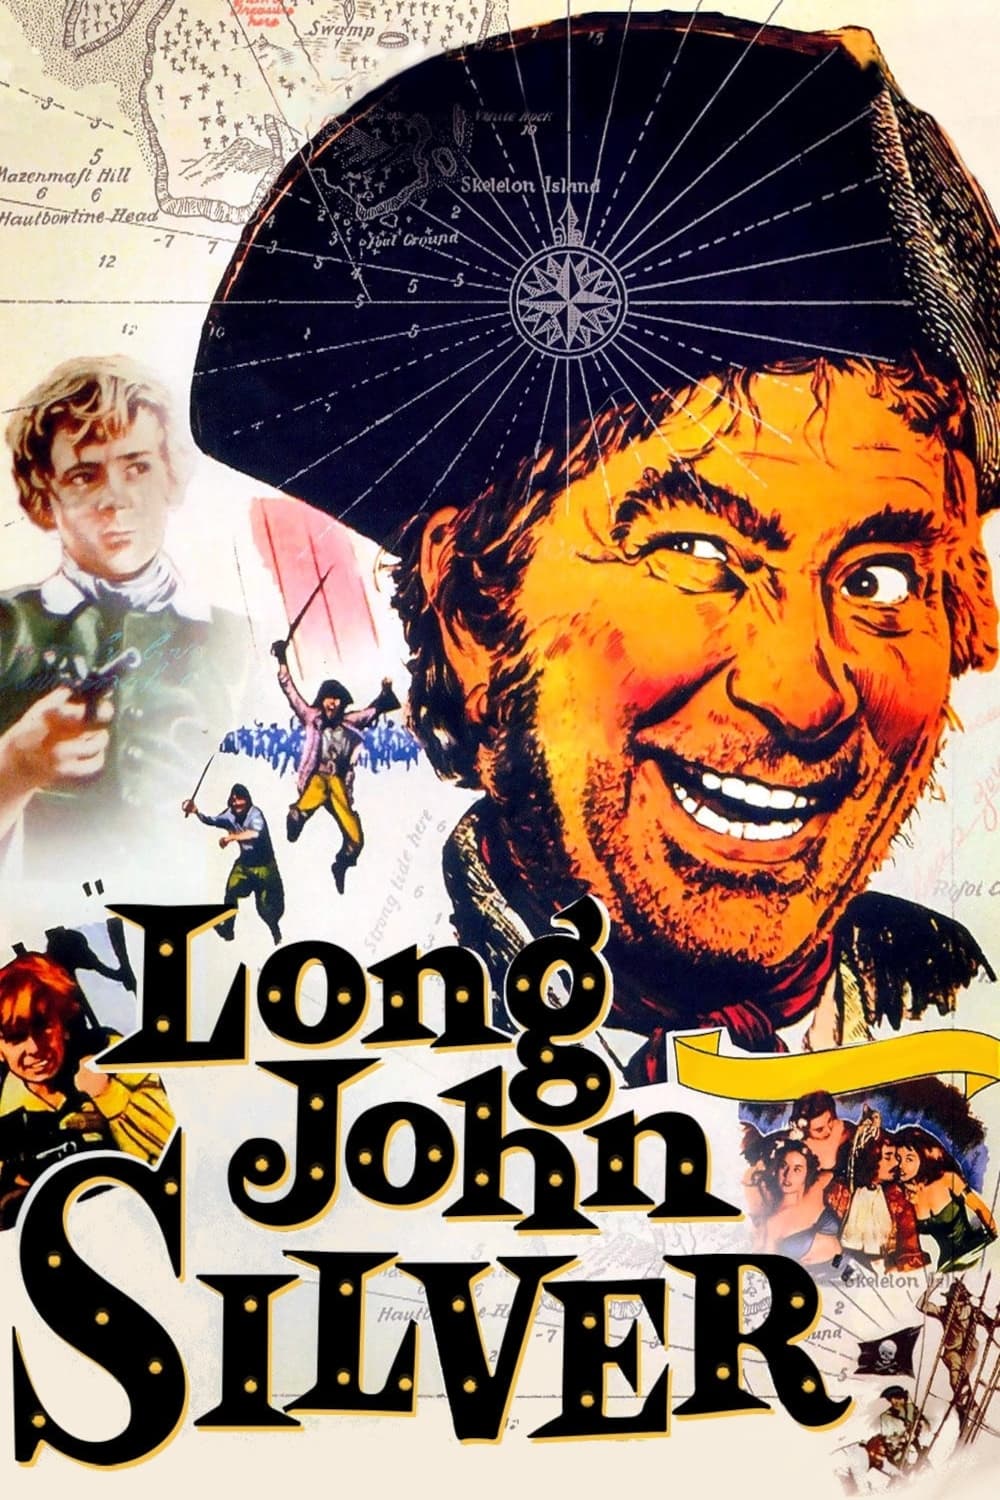 Long John Silver (1954)